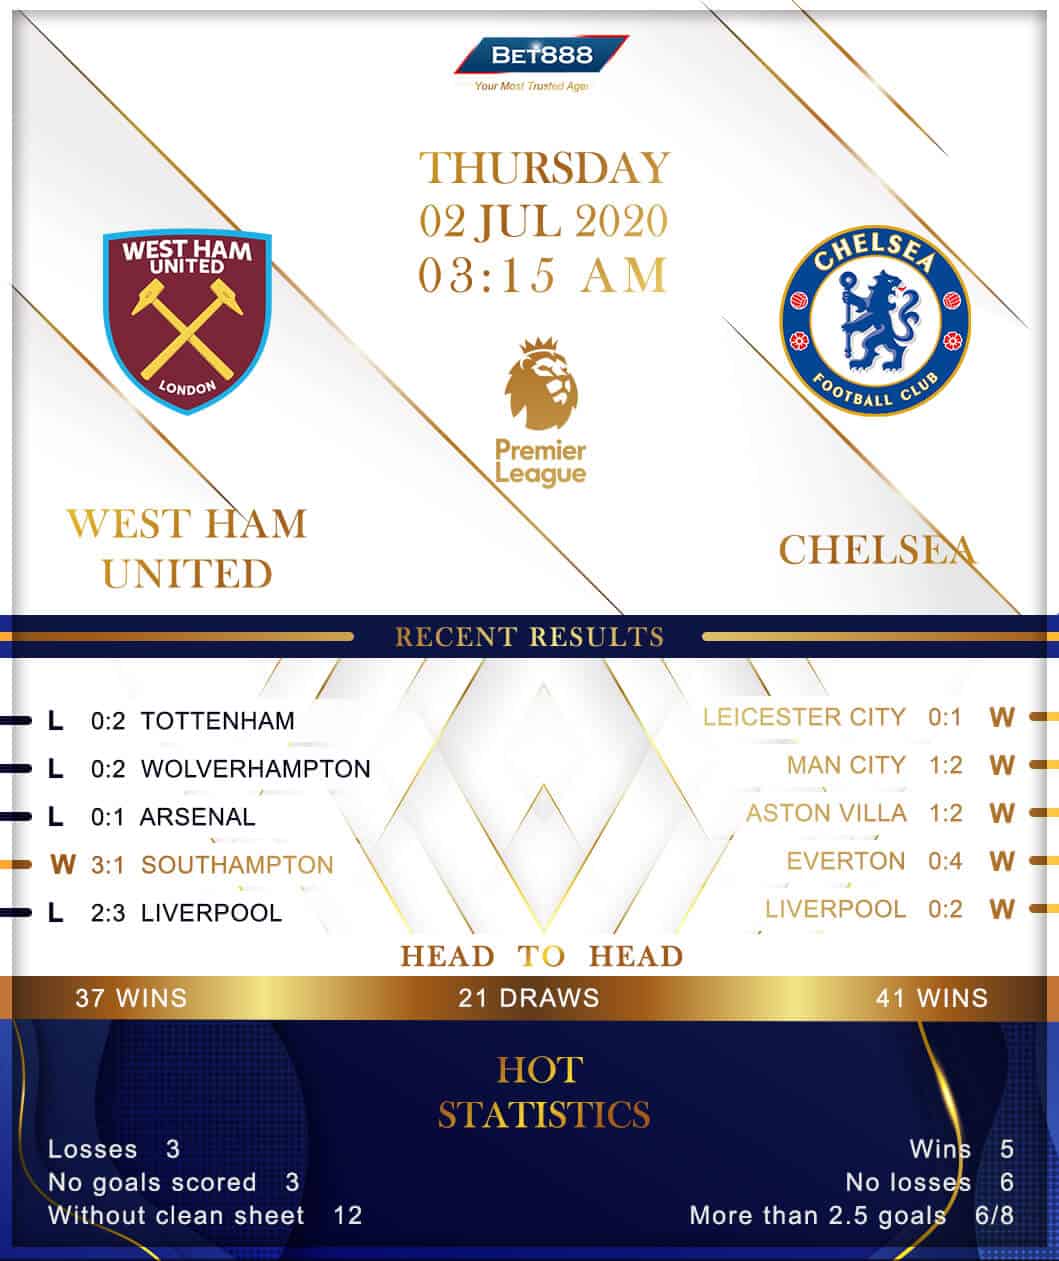 West Ham United vs Chelsea 02/07/20